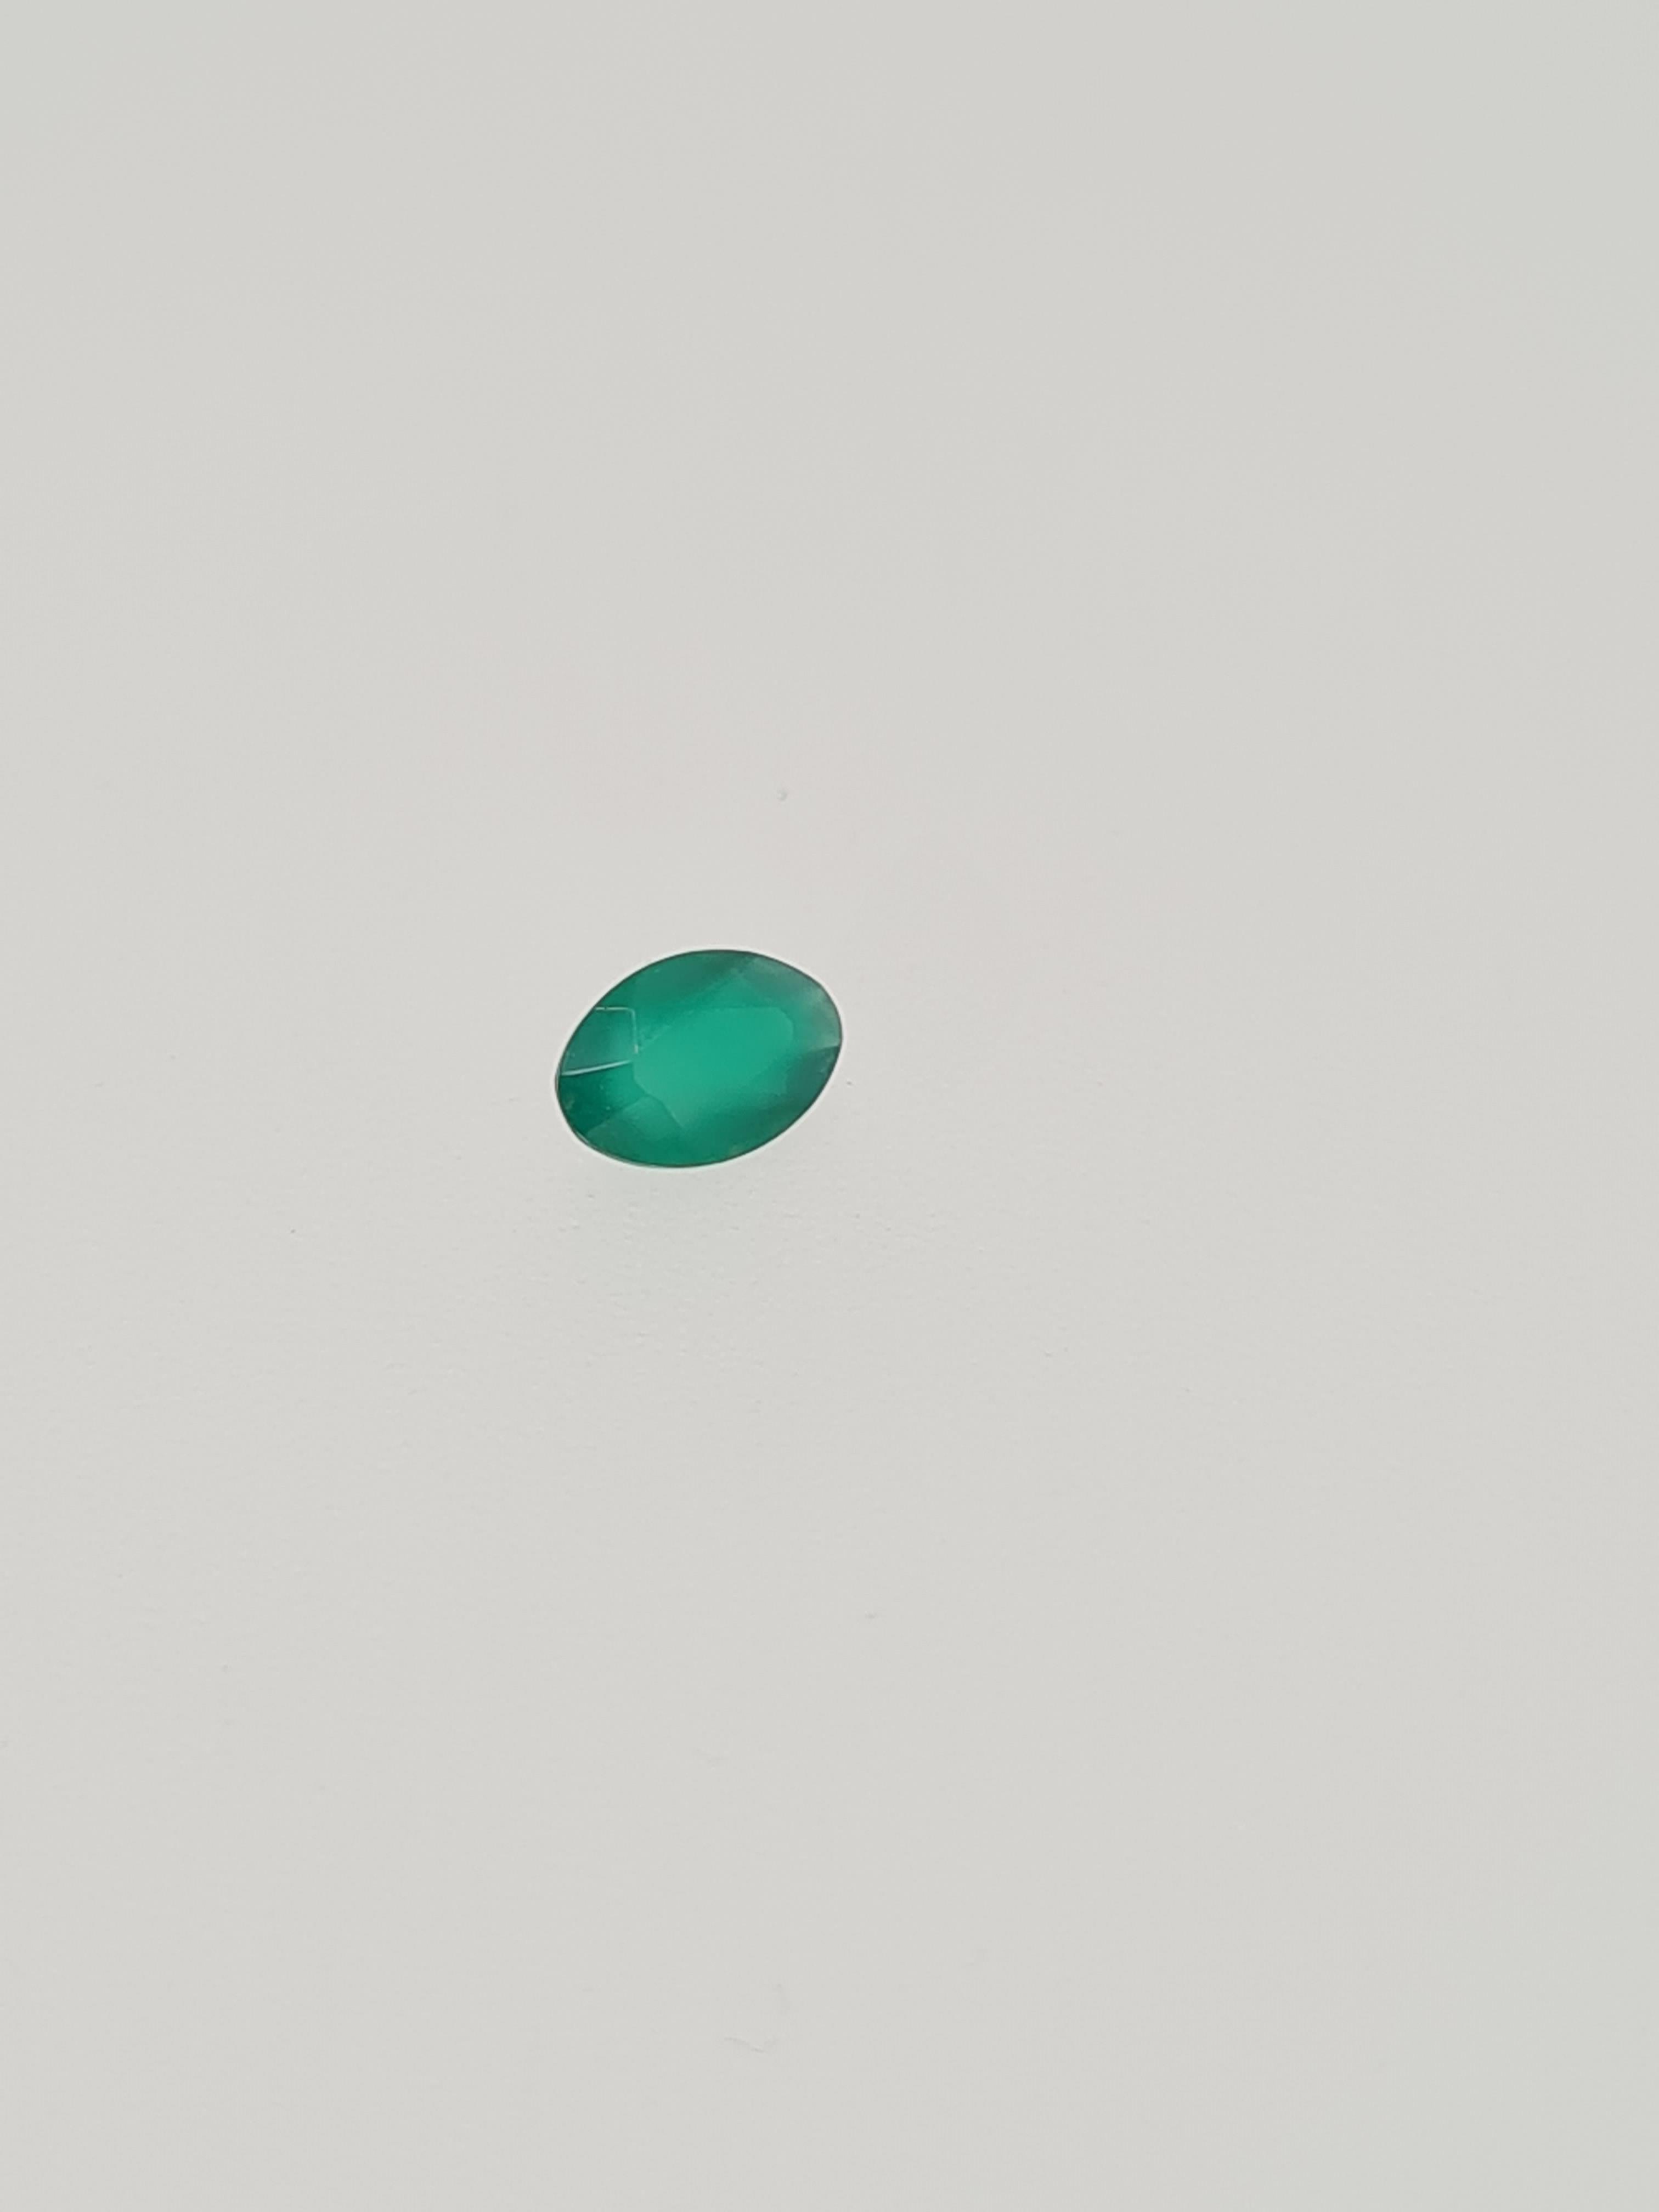 Emerald oval cut gemstone - Image 3 of 4